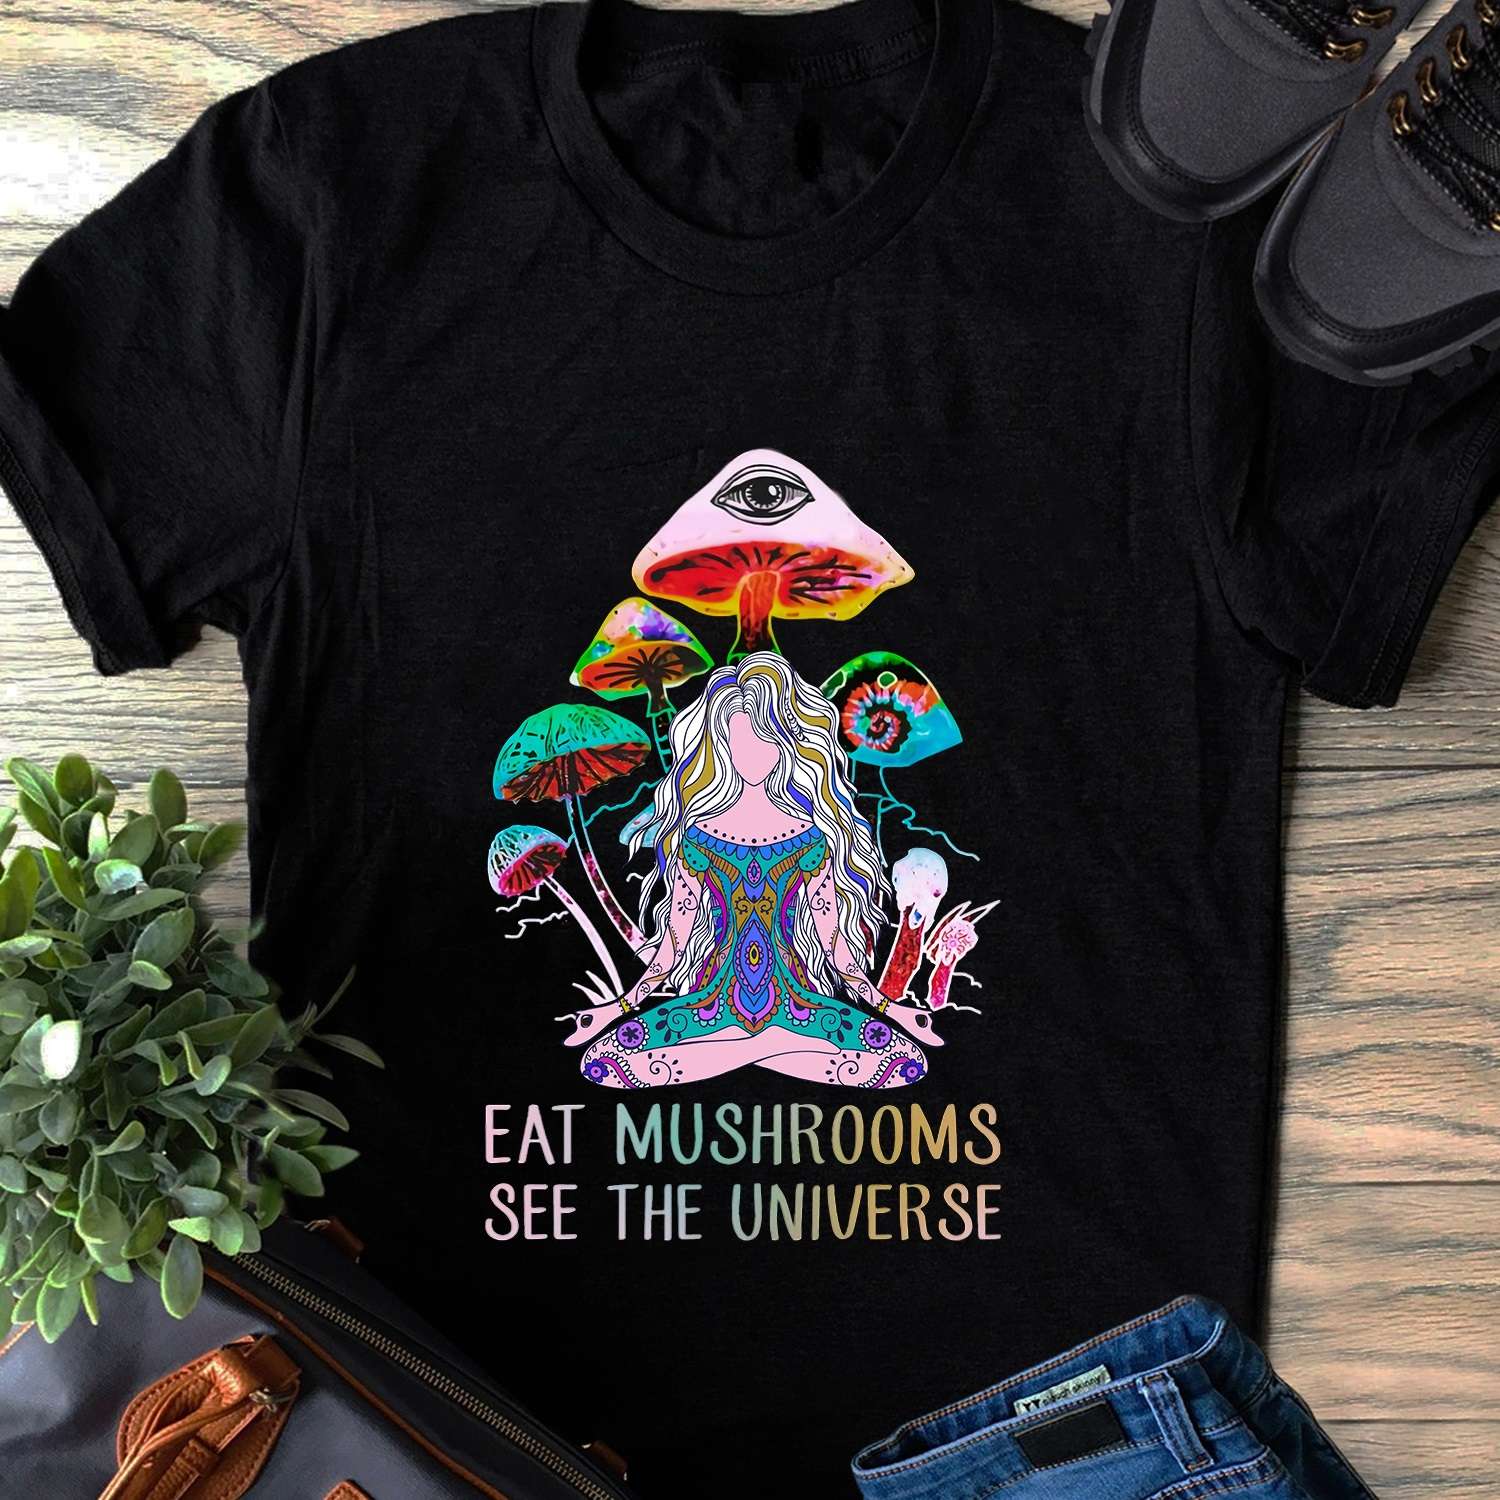 Eat mushrooms, see the universe - Illuminati group